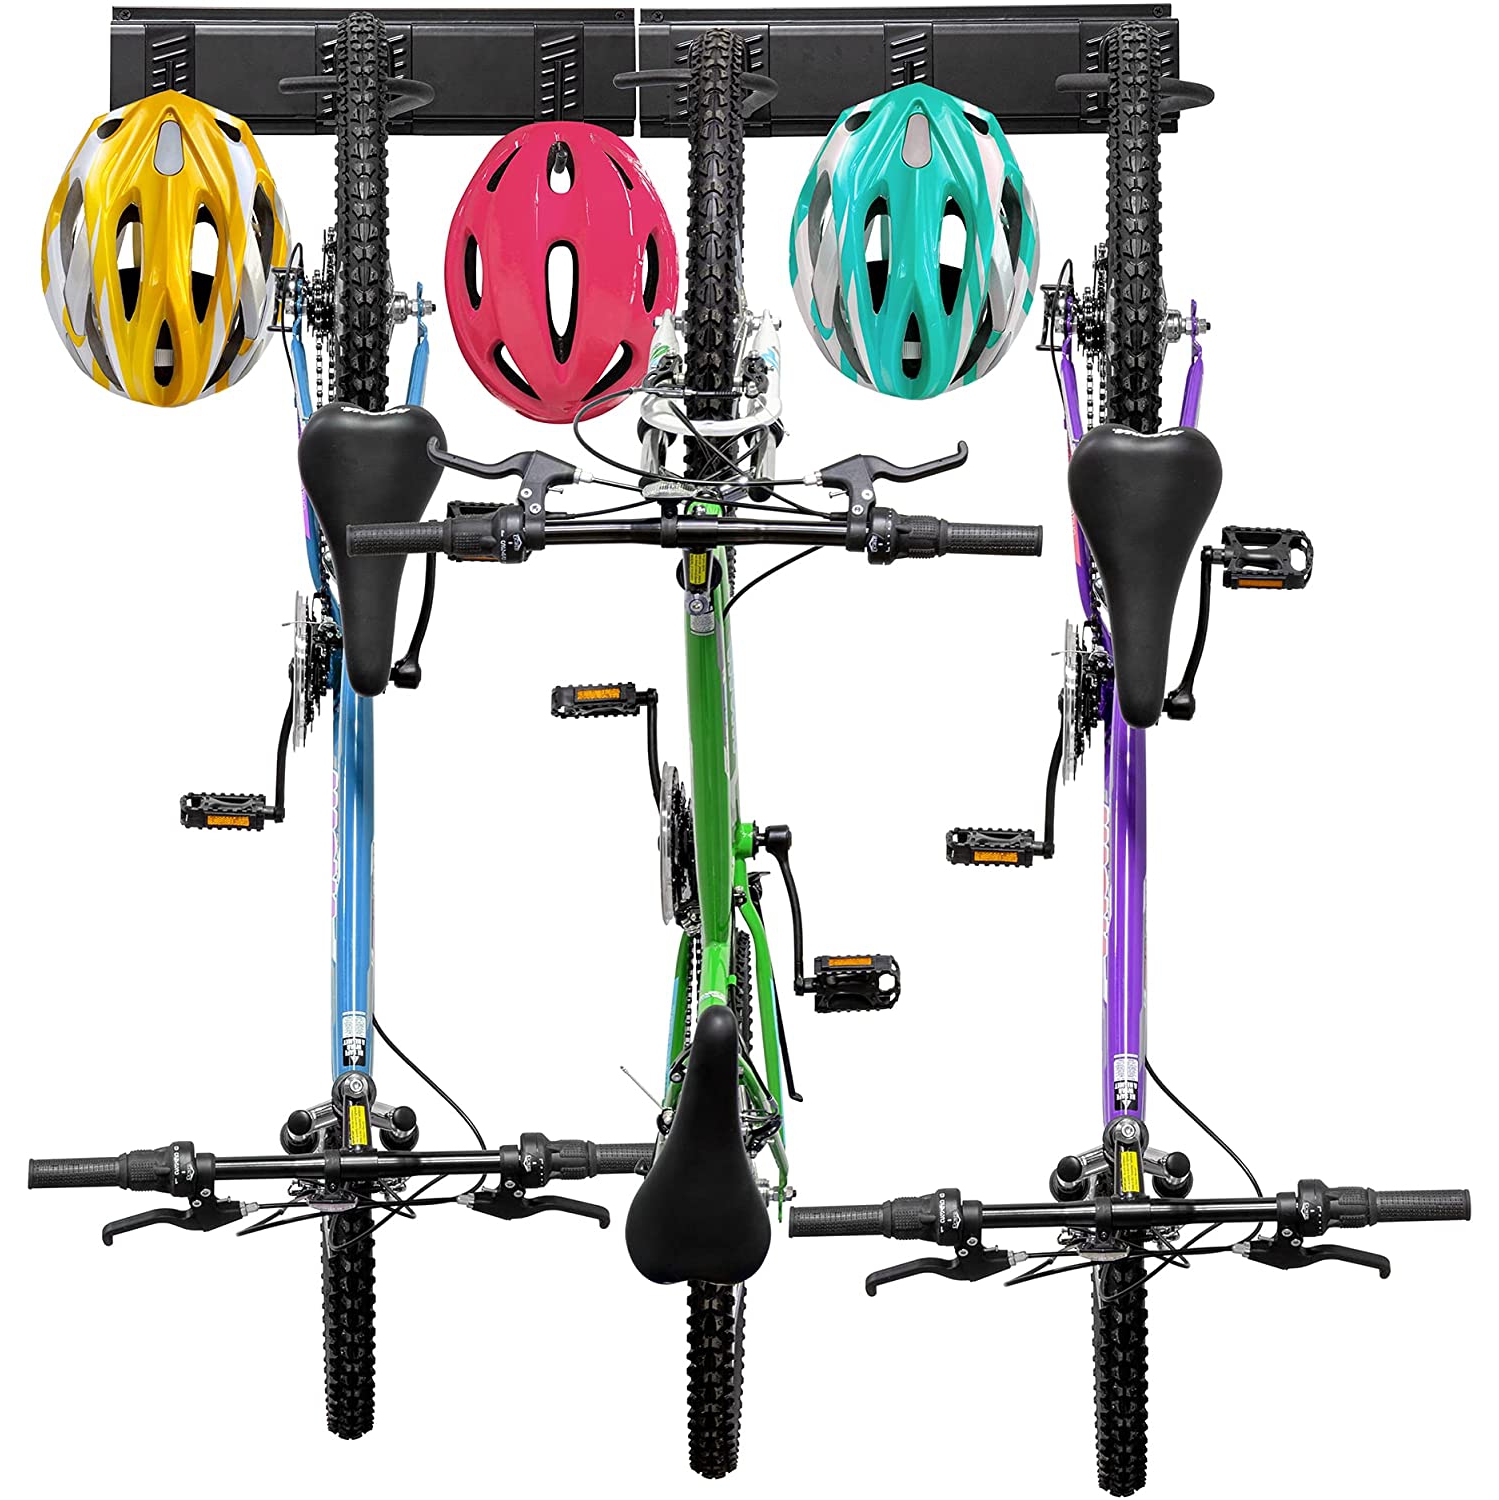 RaxGo Wall Bike Rack 3 Bicycle hooks and 3 Helmet Hooks